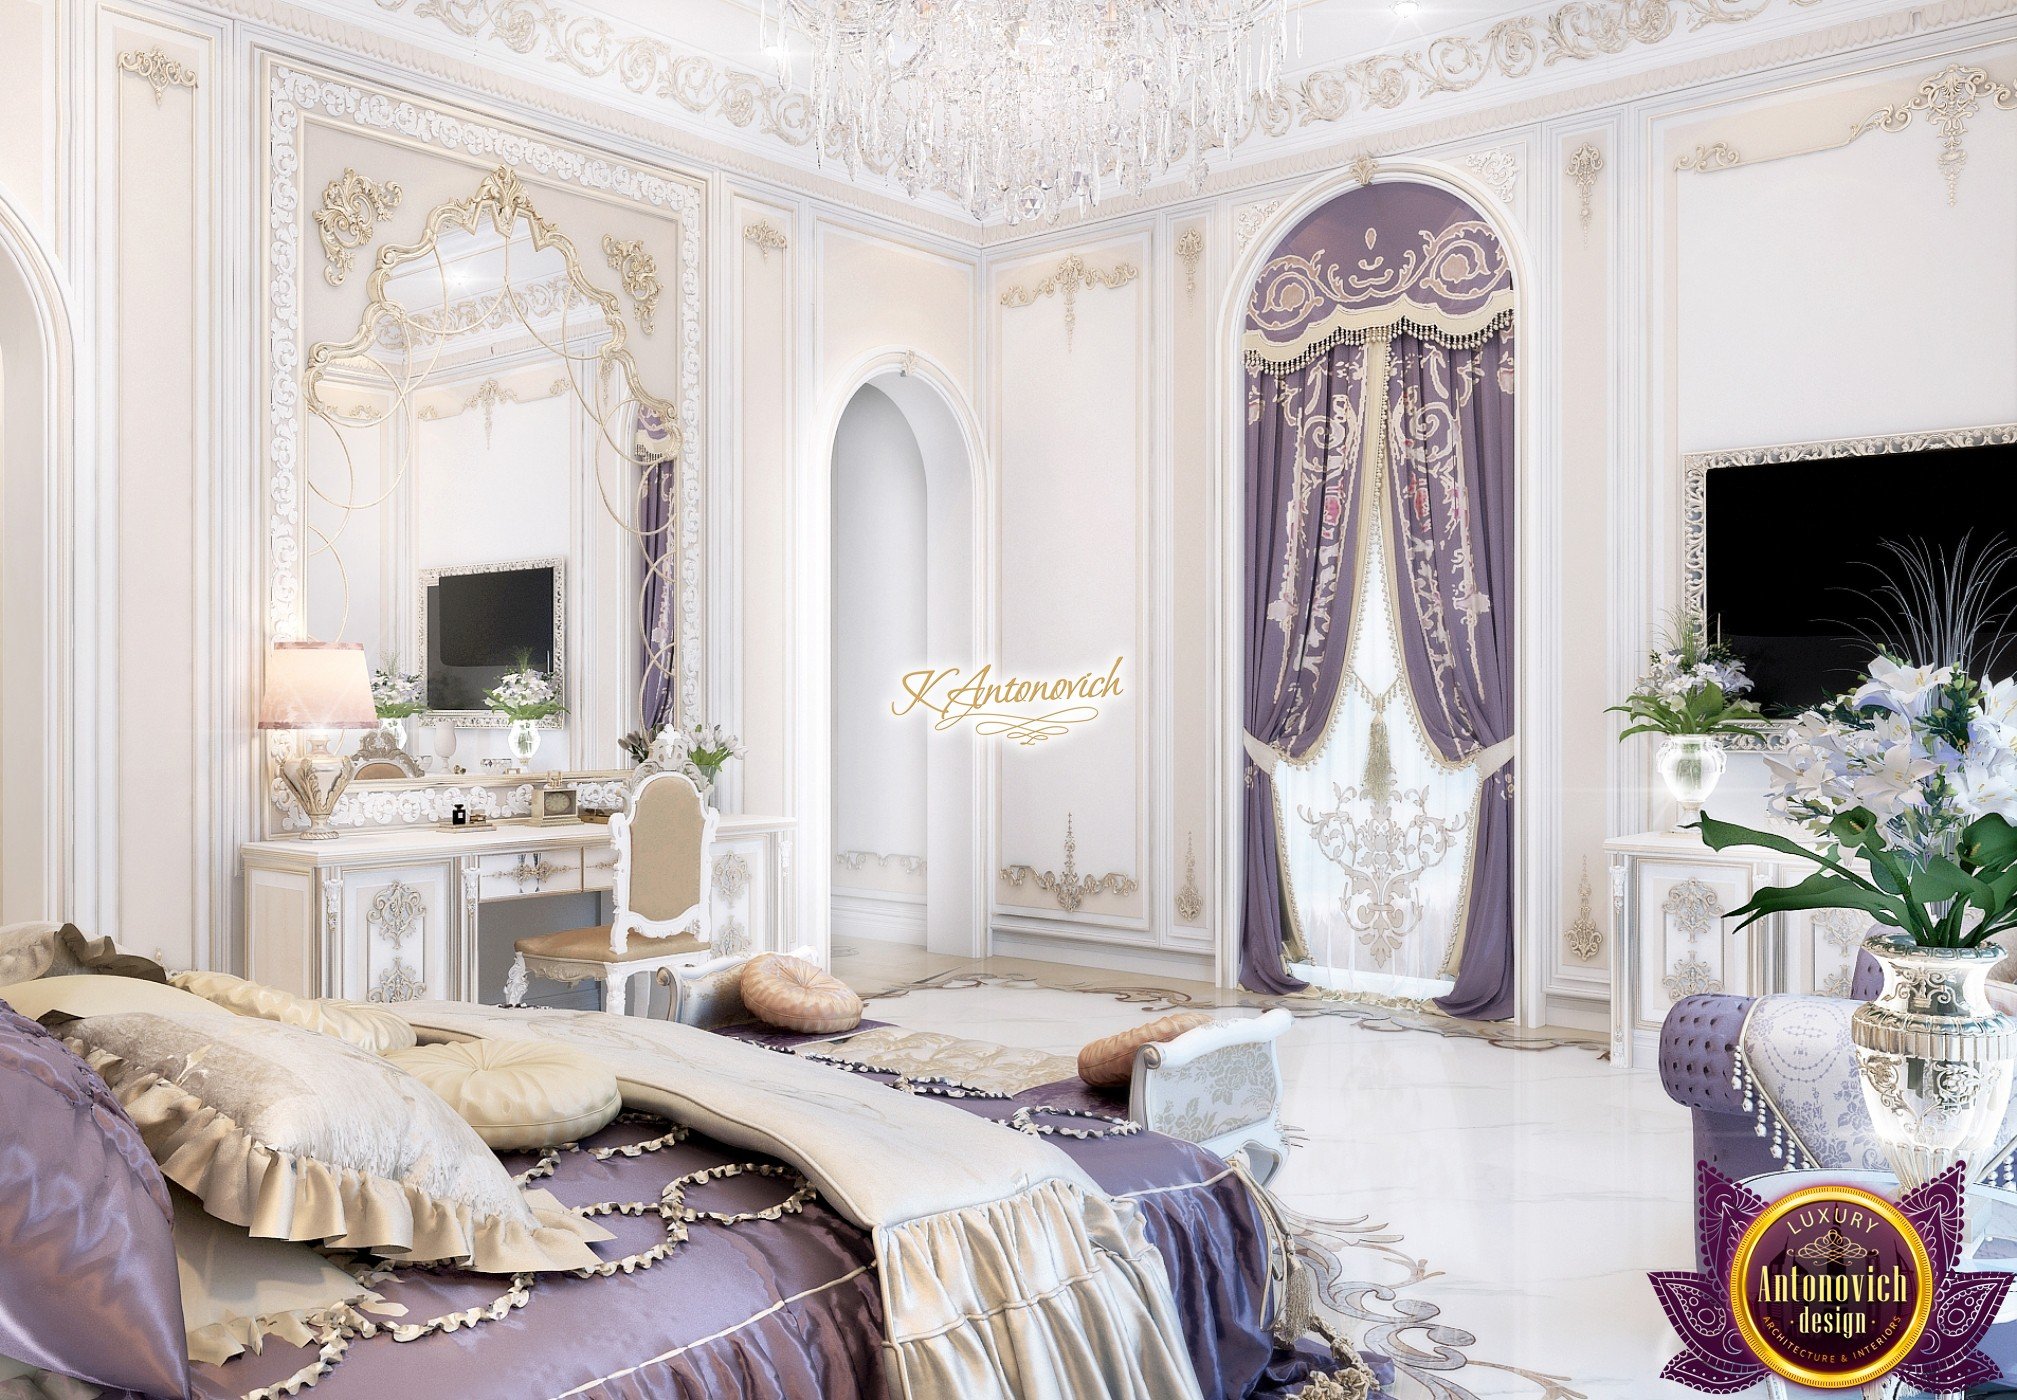 Beautiful bedrooms